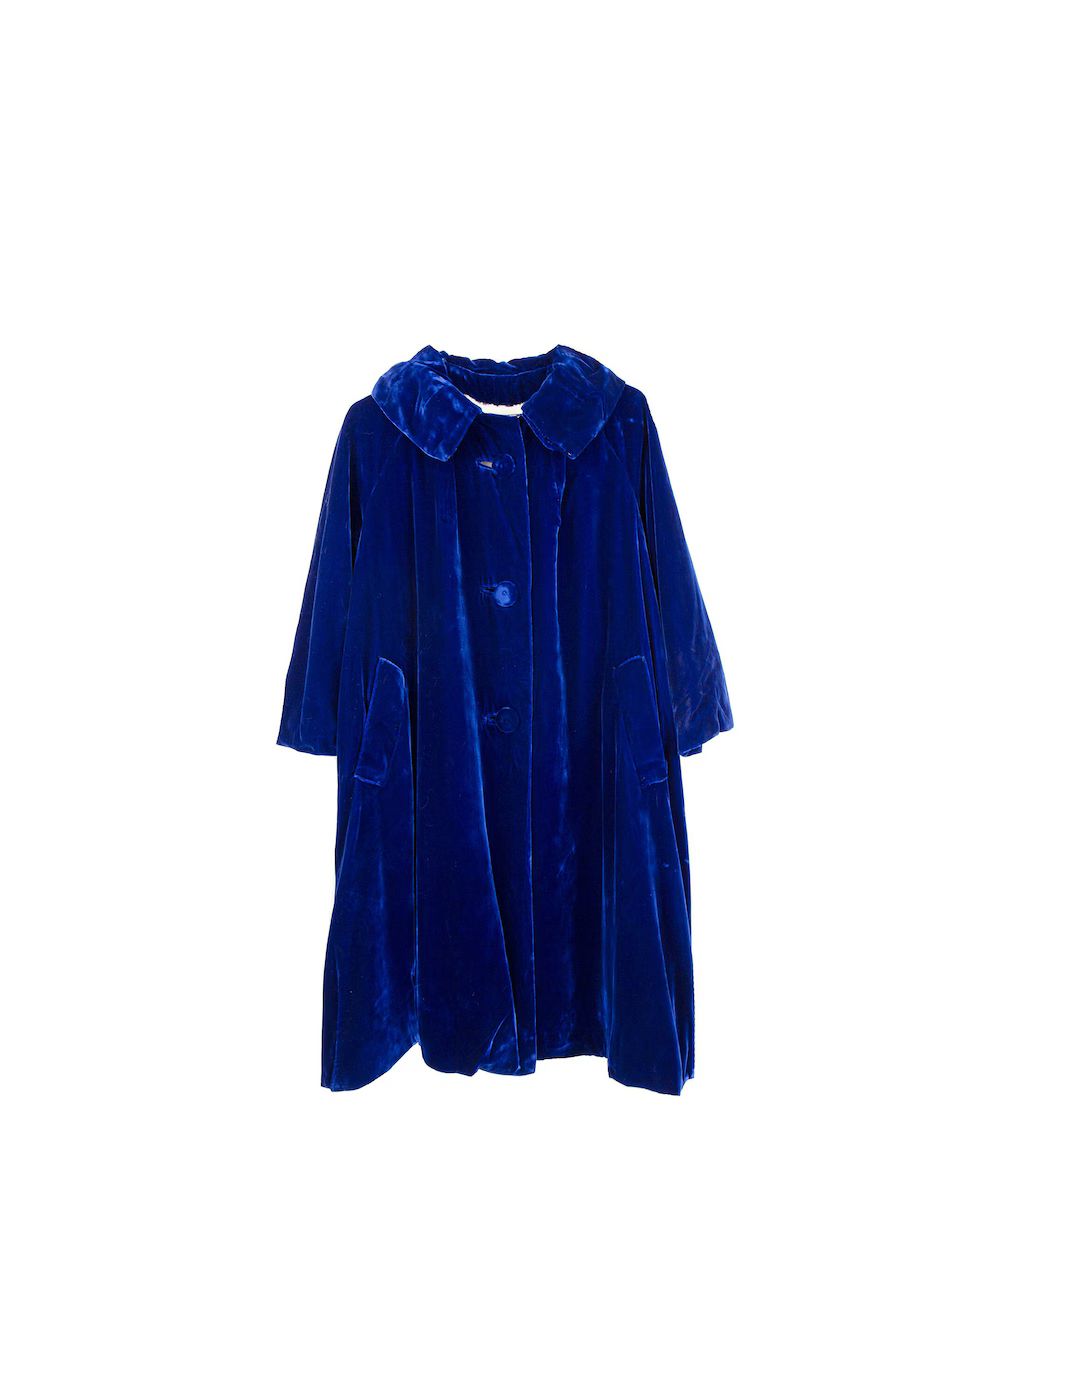 Vintage 50s Blue Velvet Swing Coat size S/M | Etsy (CAD)